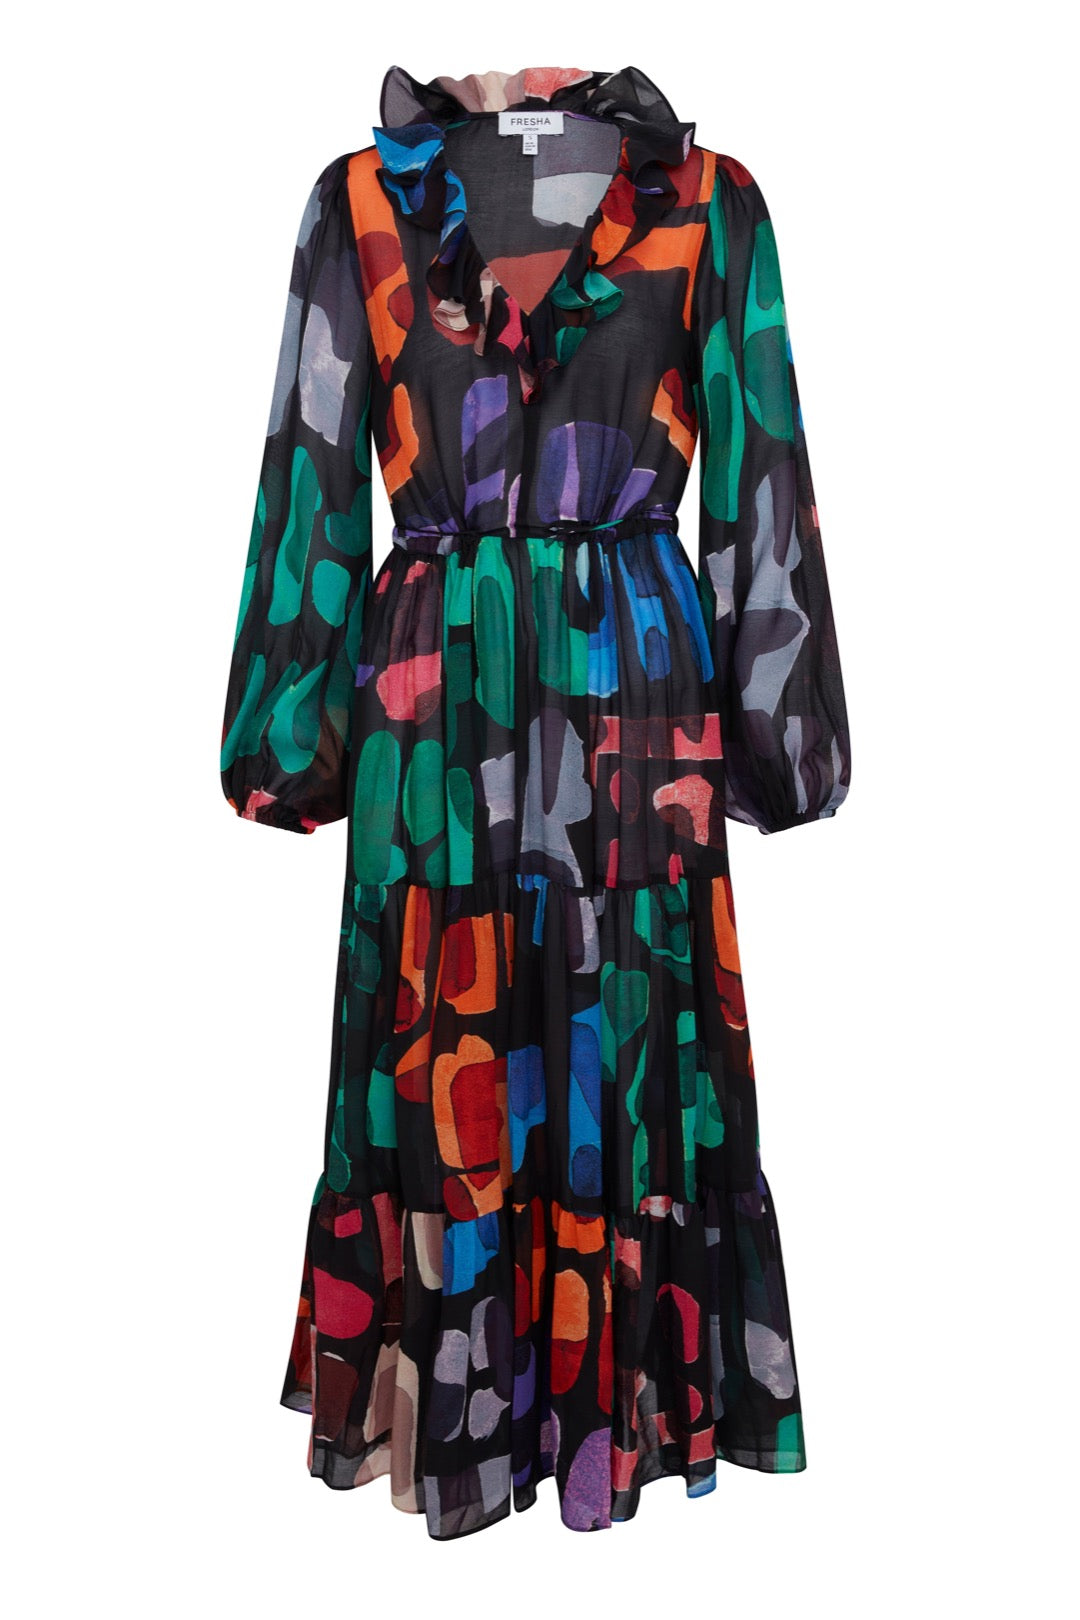 Fresha London Women's Ivy Dress Abstract In Multi